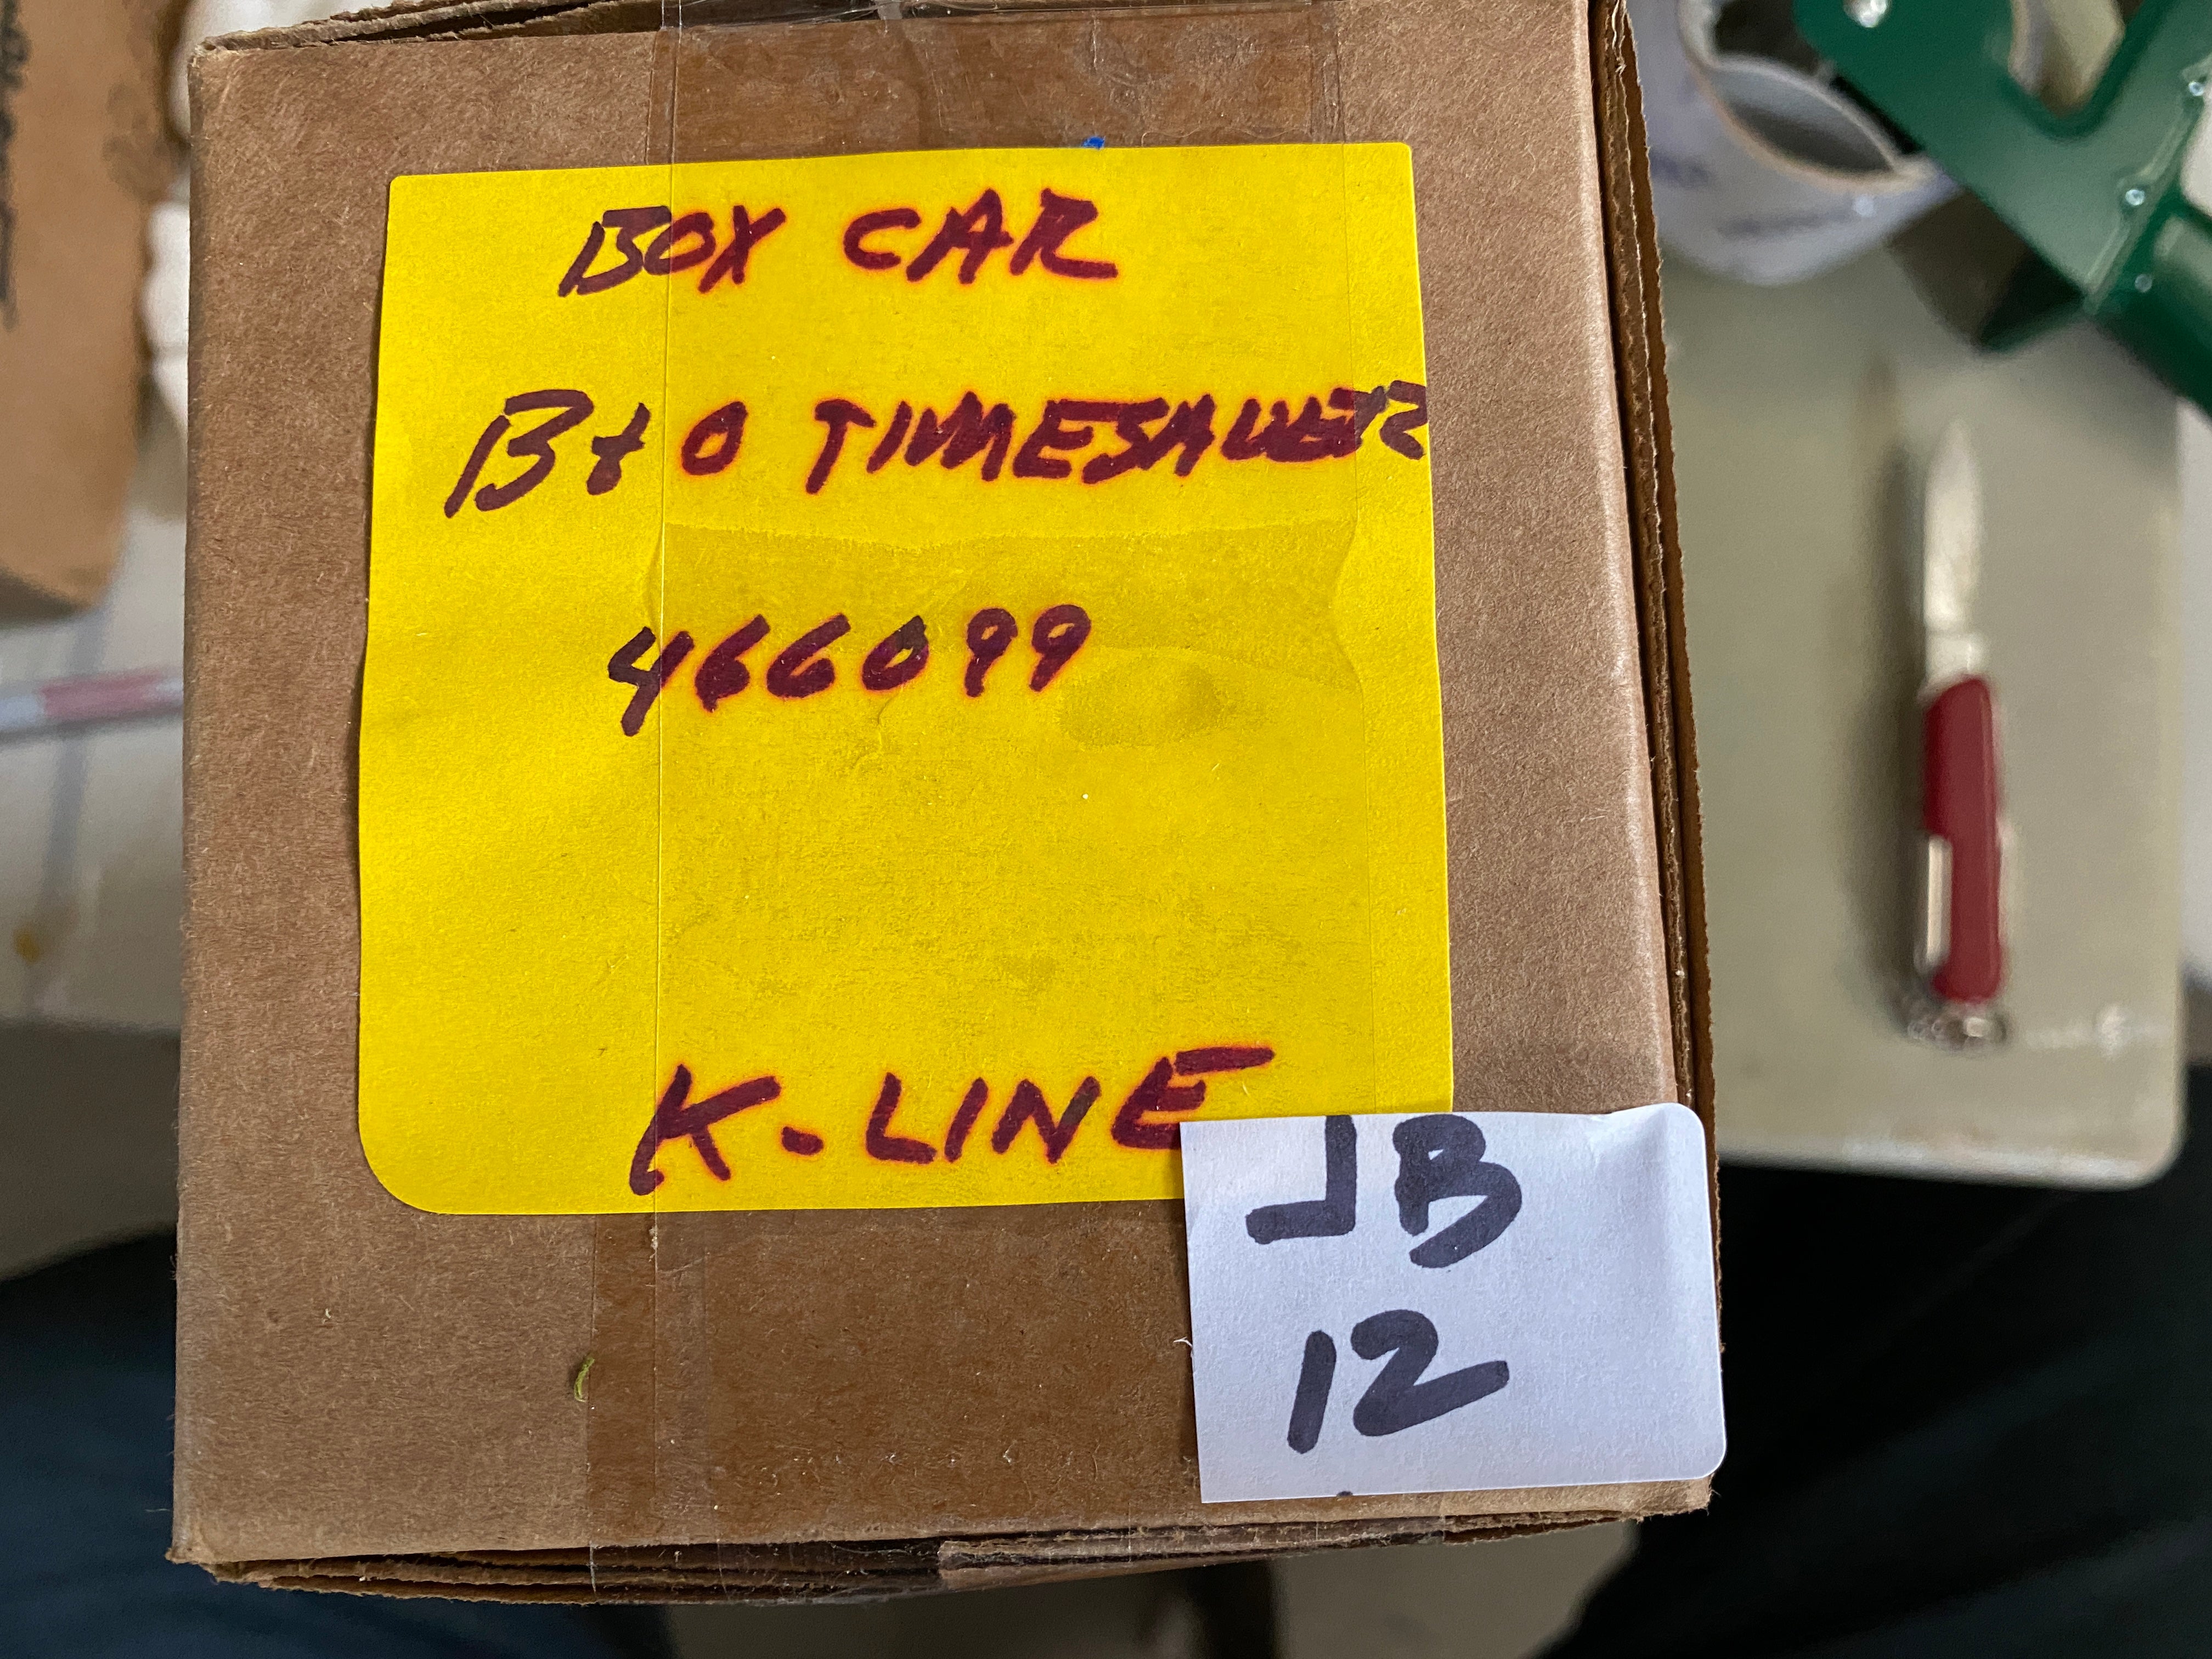 K-Line K761-1093 - Box Car "Baltimore & Ohio" (Timesaver) #466099 - Second Hand